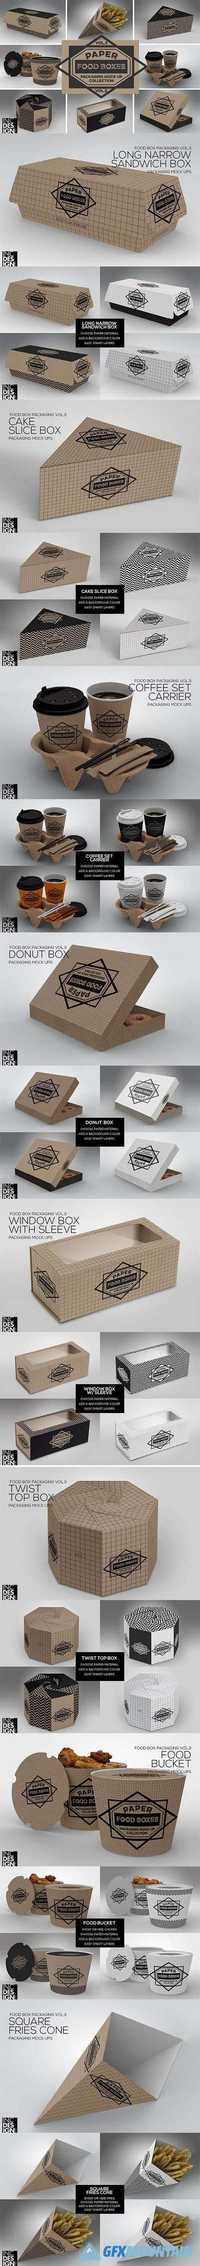  VOL.3 Food Box Packaging MockUps  1107561 